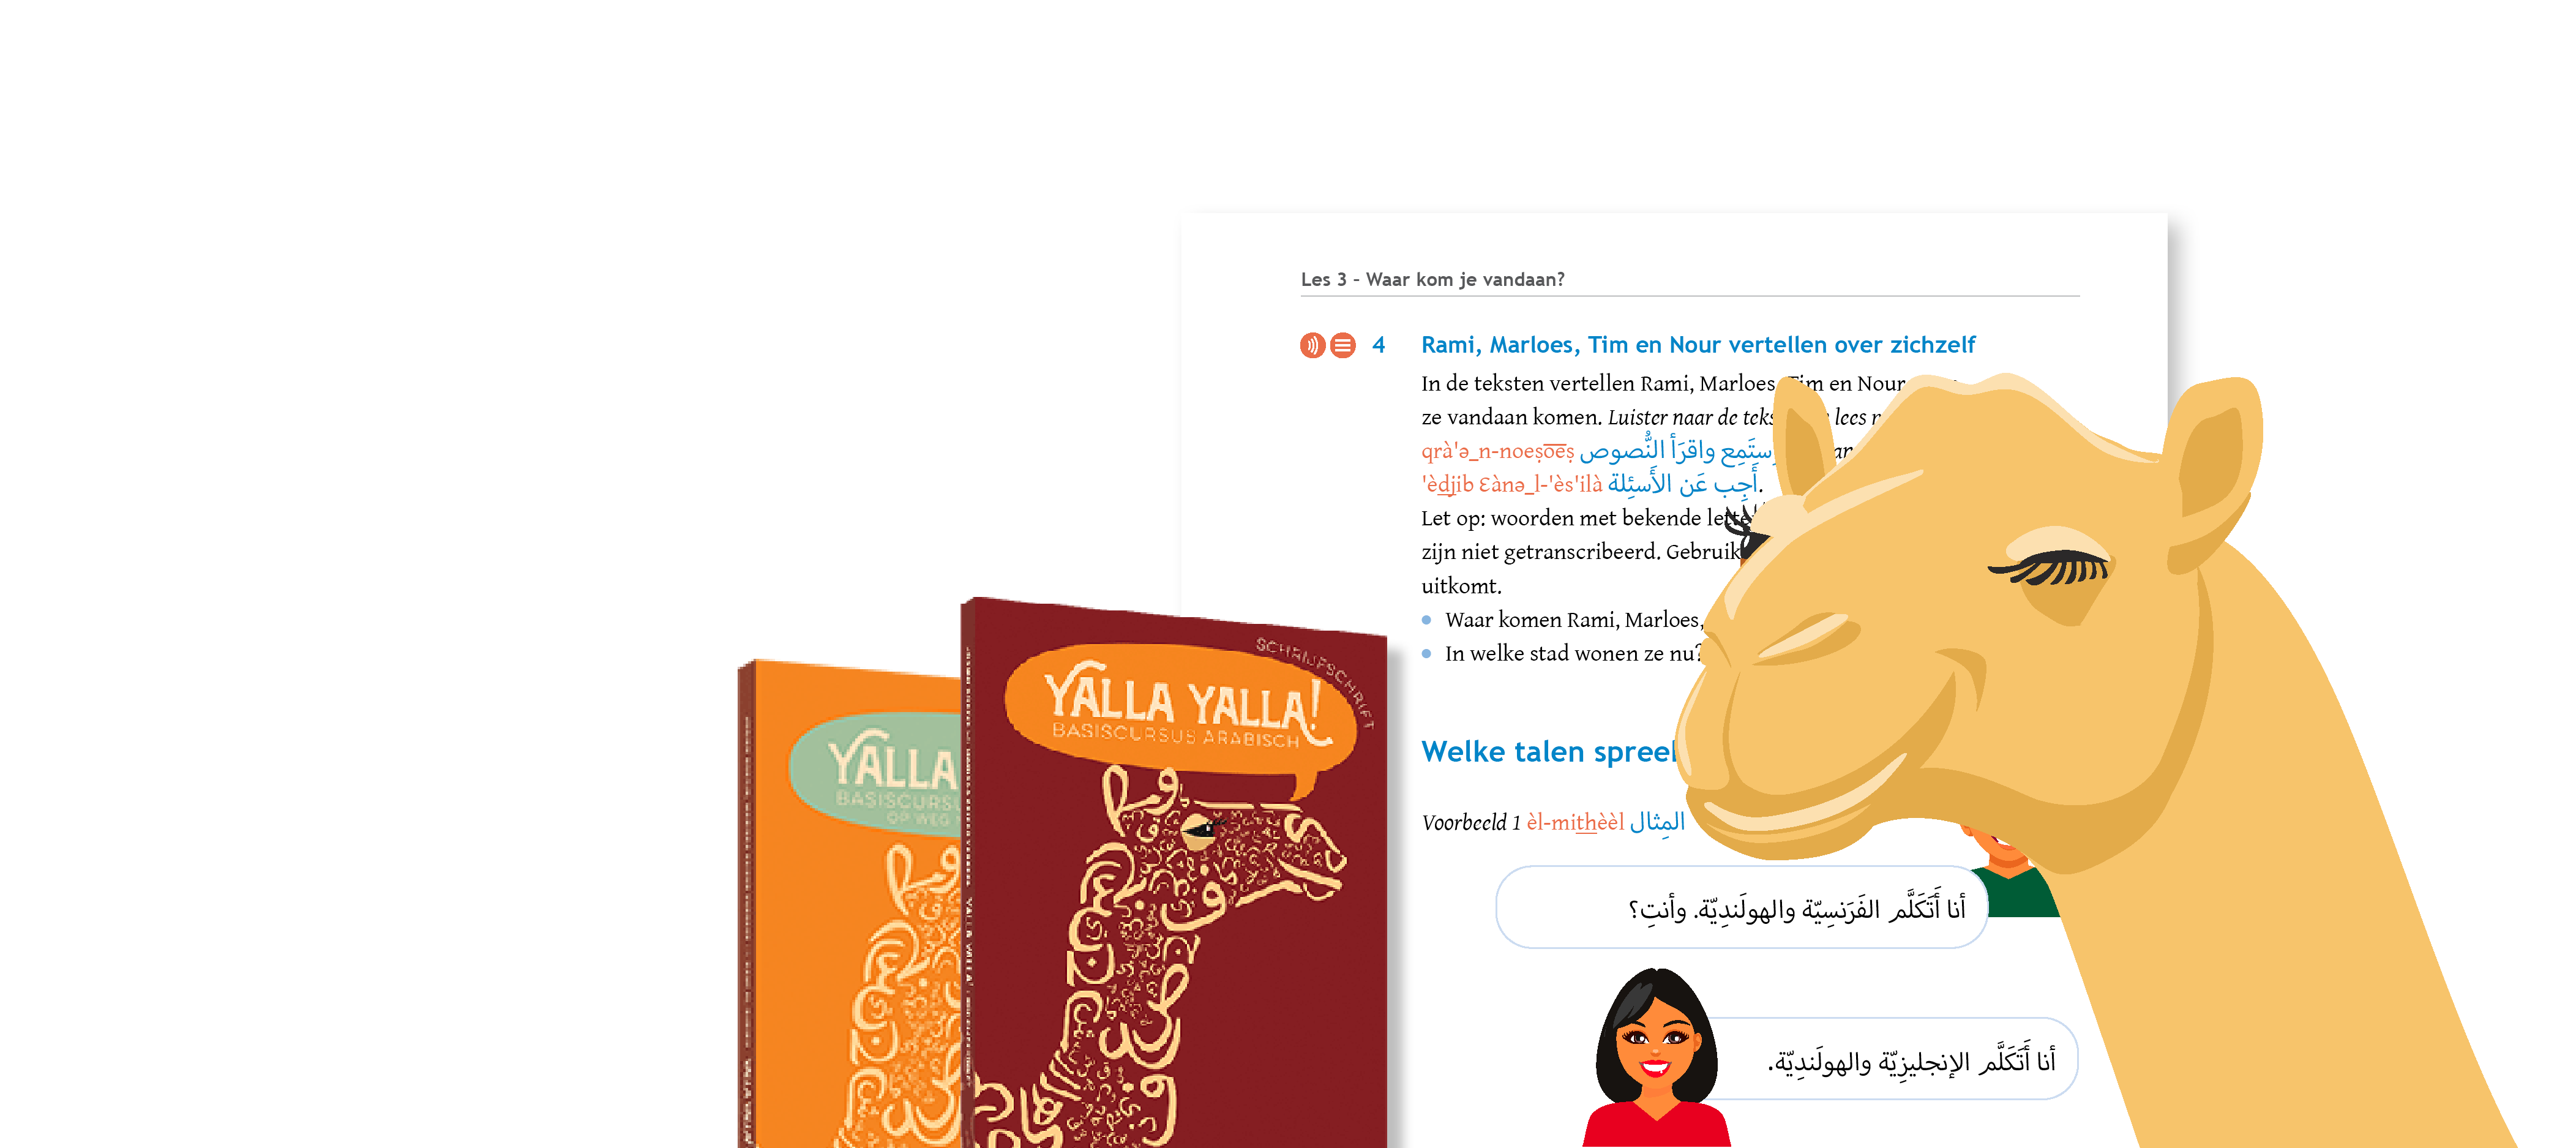 studiemethode Yalla Yalla! Arabisch